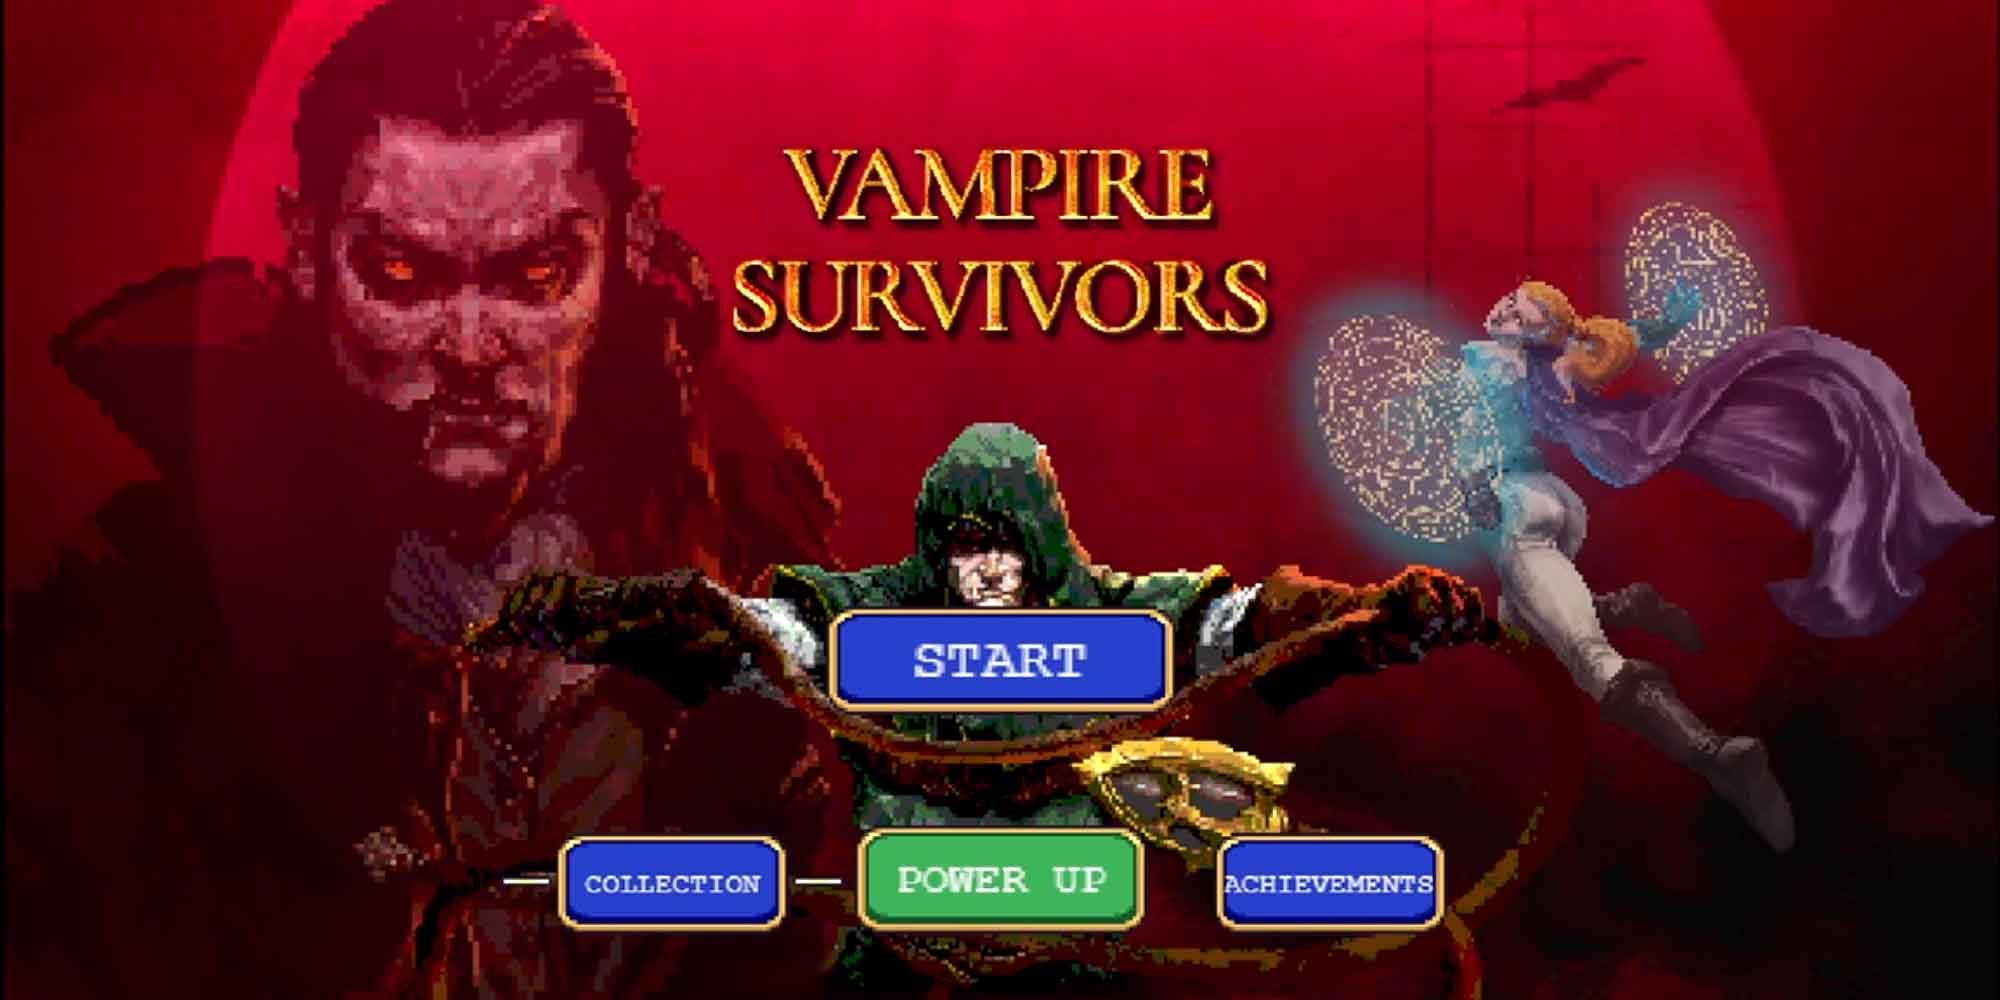 The title screen for Vampire Survivors